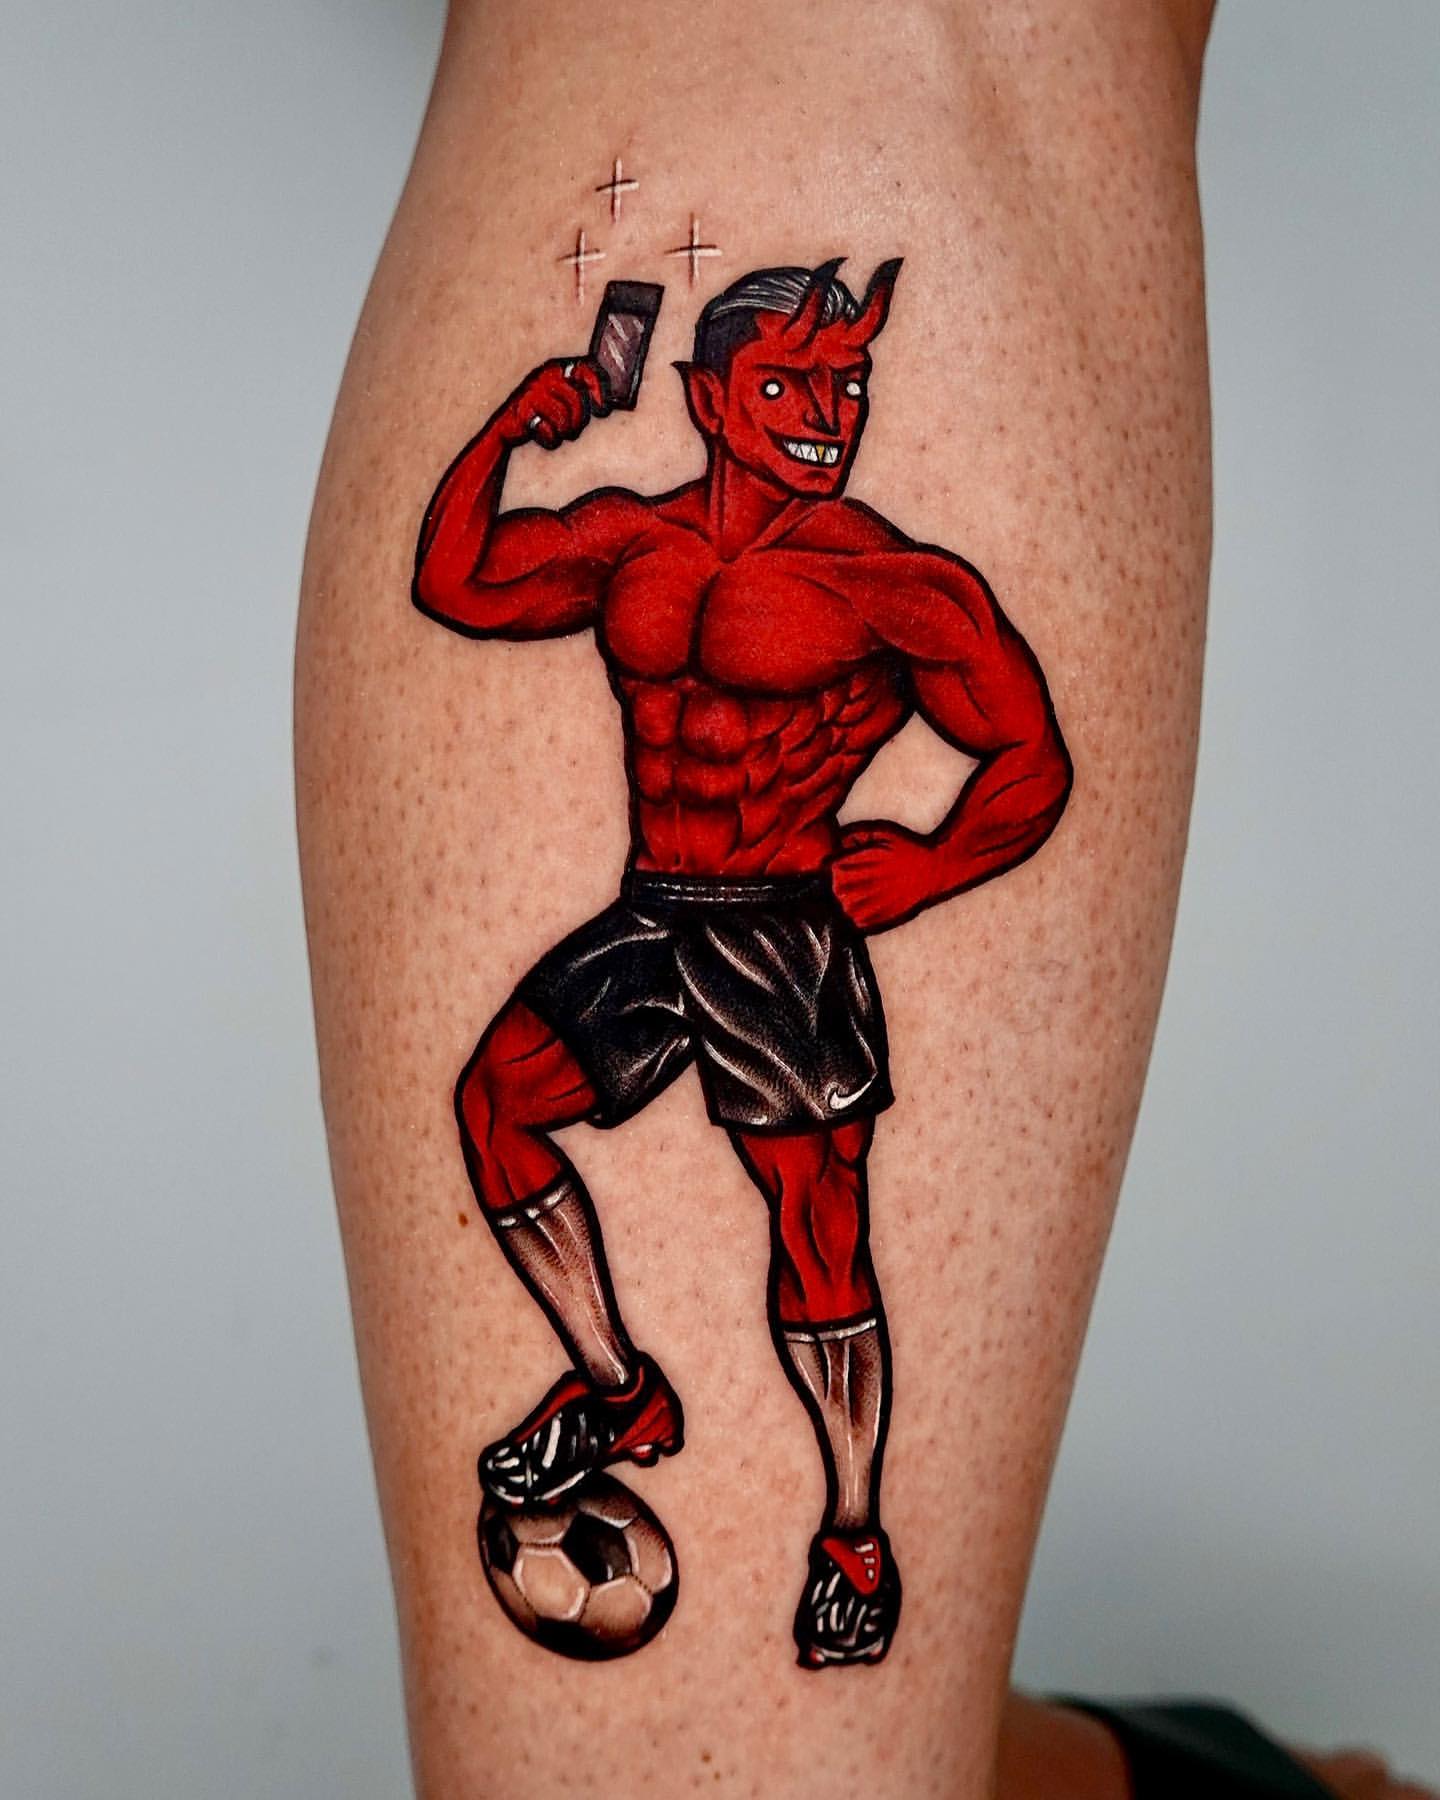 Best leg tattoos for men, Cool leg tattoos 2k22